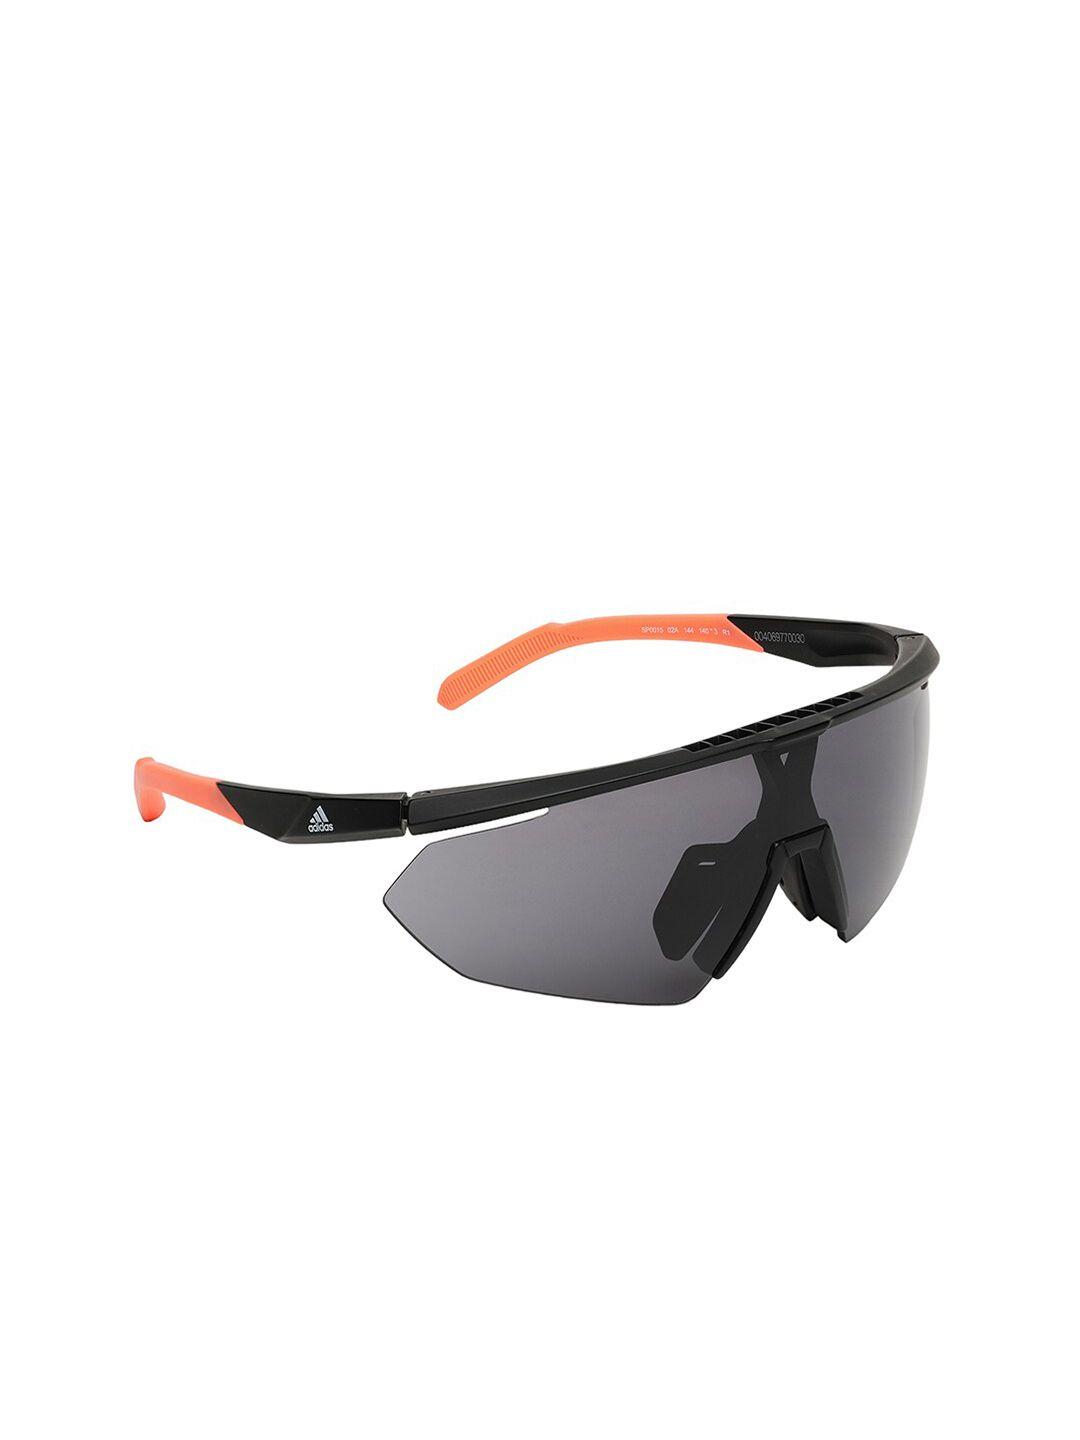 adidas-men-uv-protected-sports-sunglasses-sp0015-02a